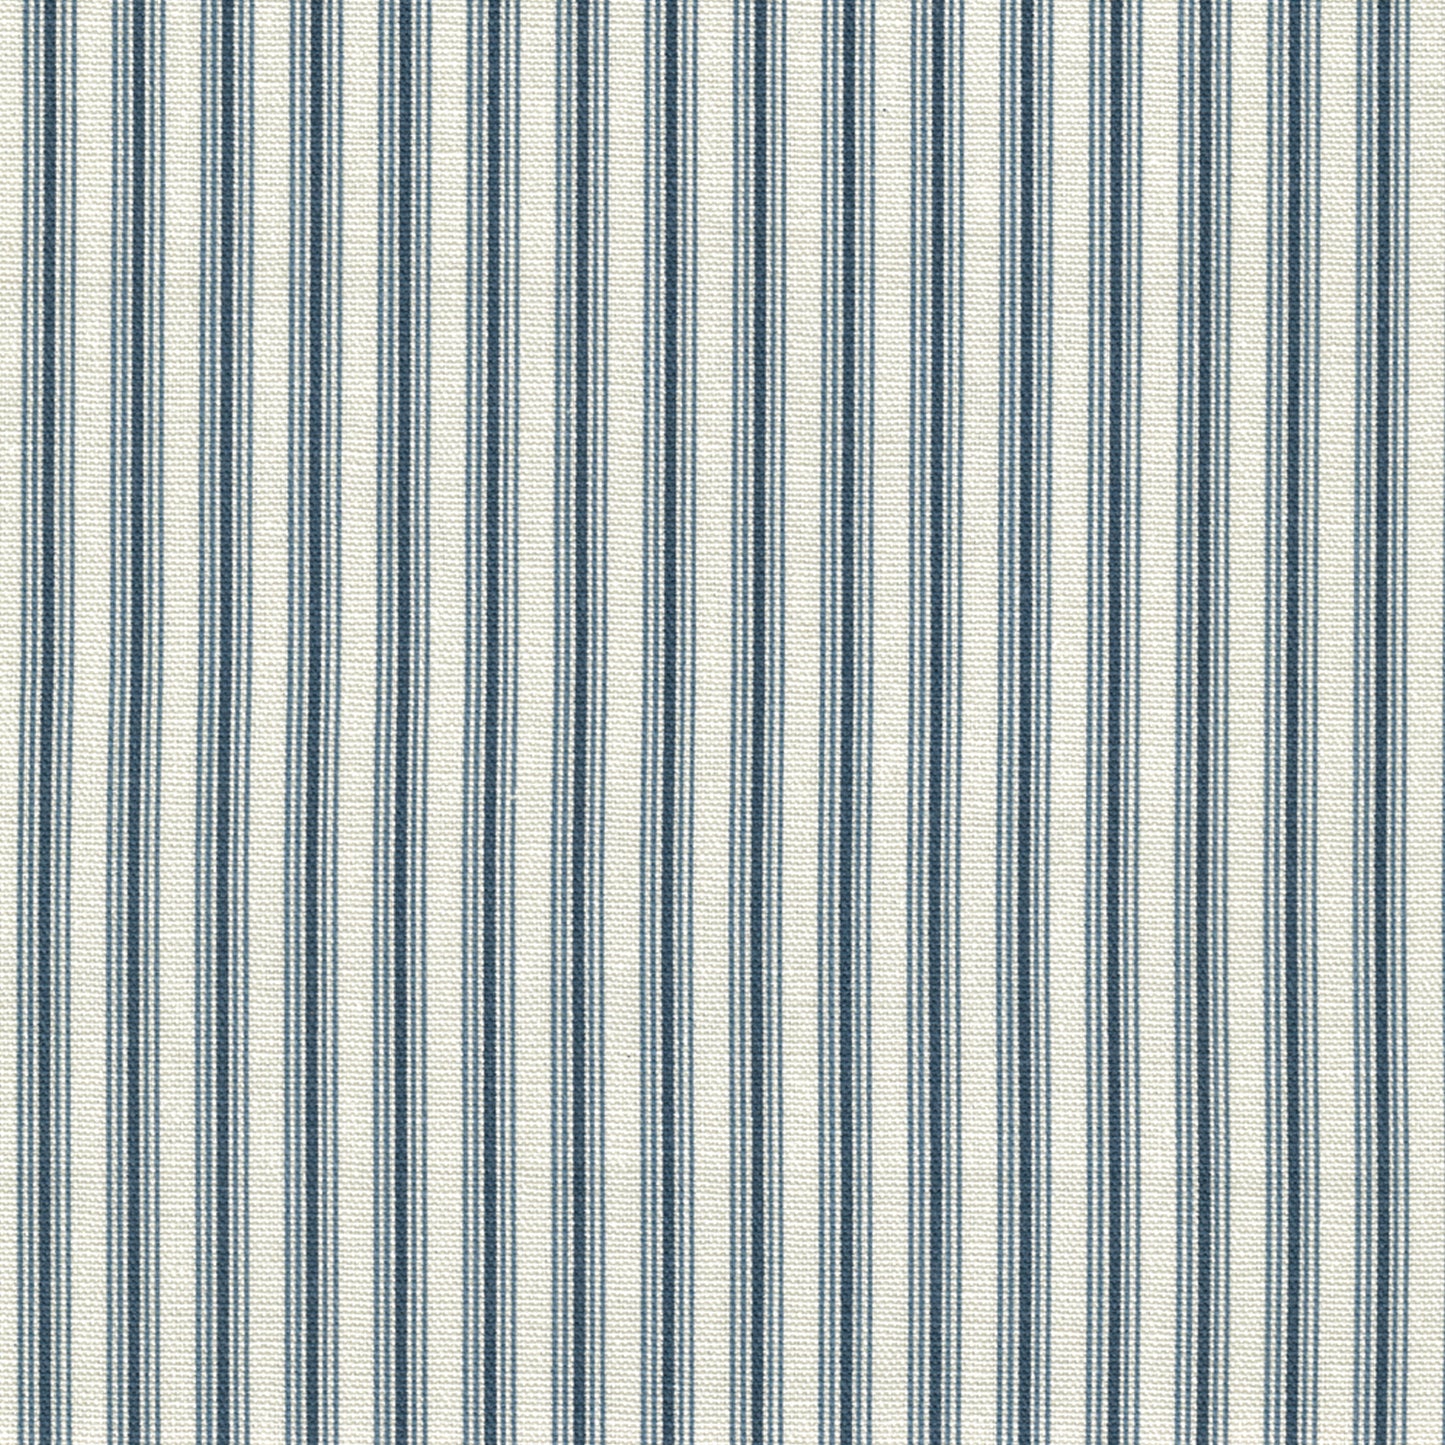 rod pocket curtains in cottage navy blue stripe